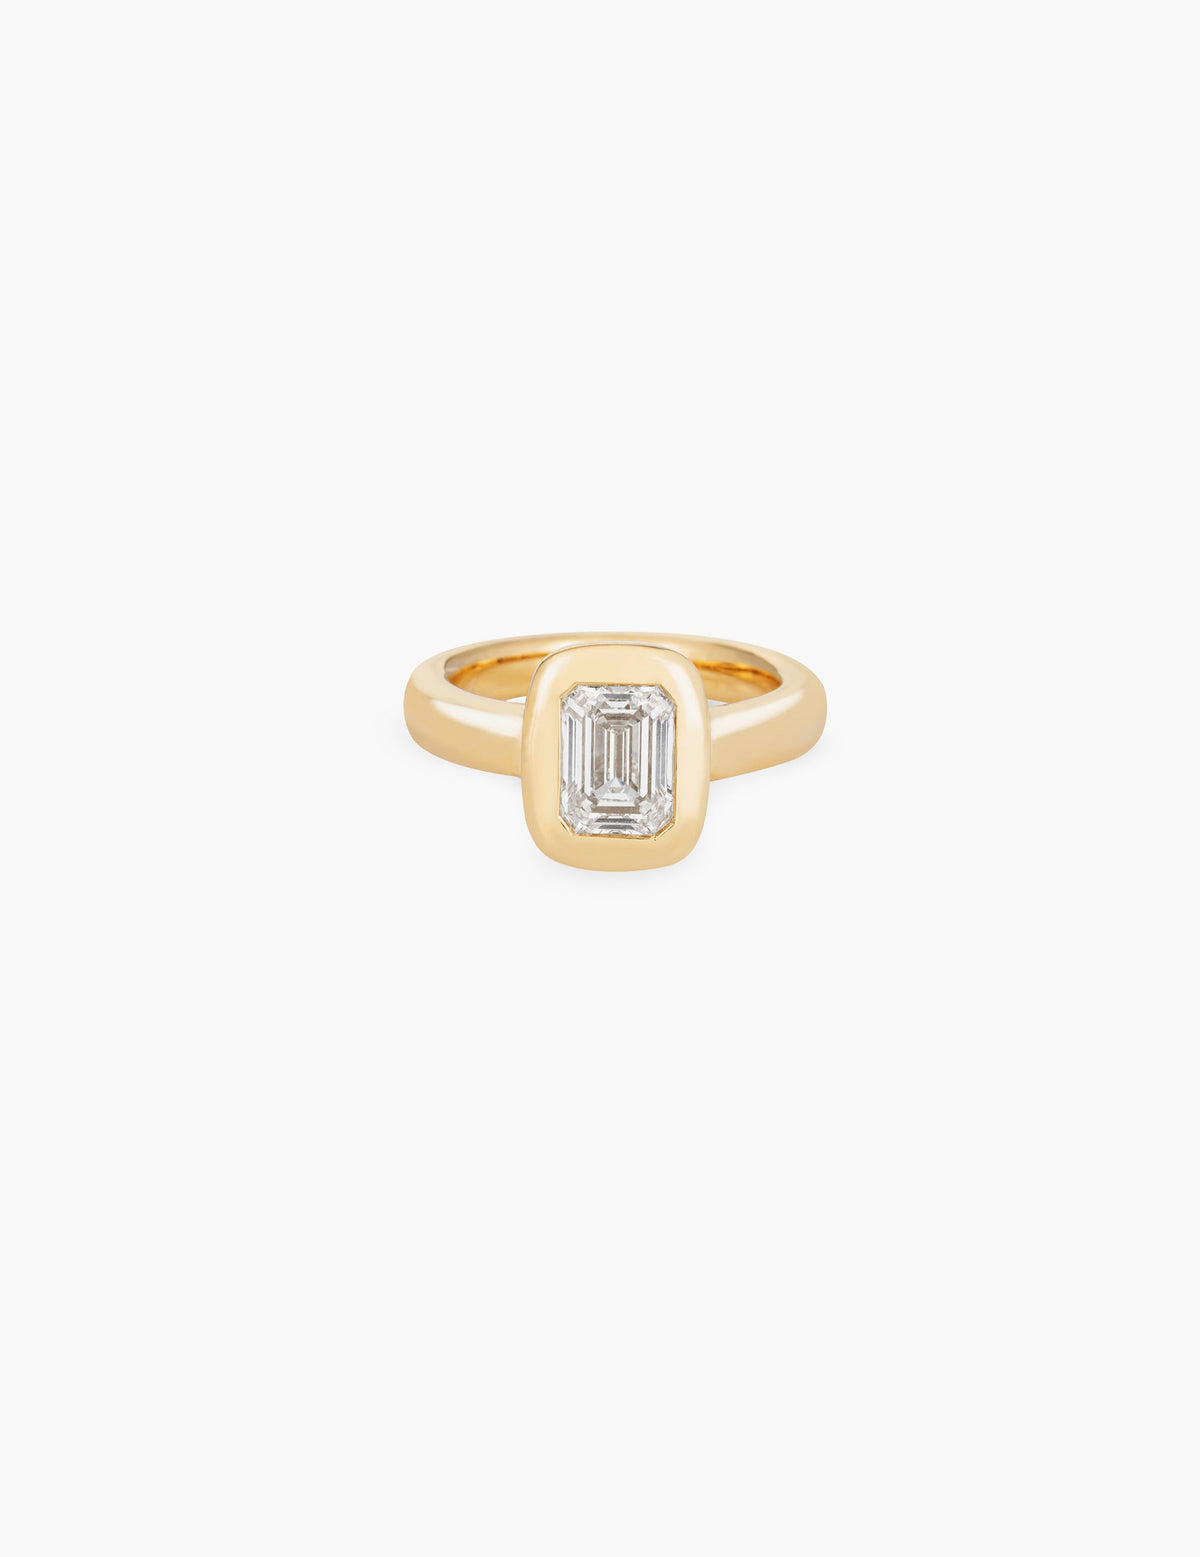 Elizabeth ring with 1.63ct Lab Grown Diamond